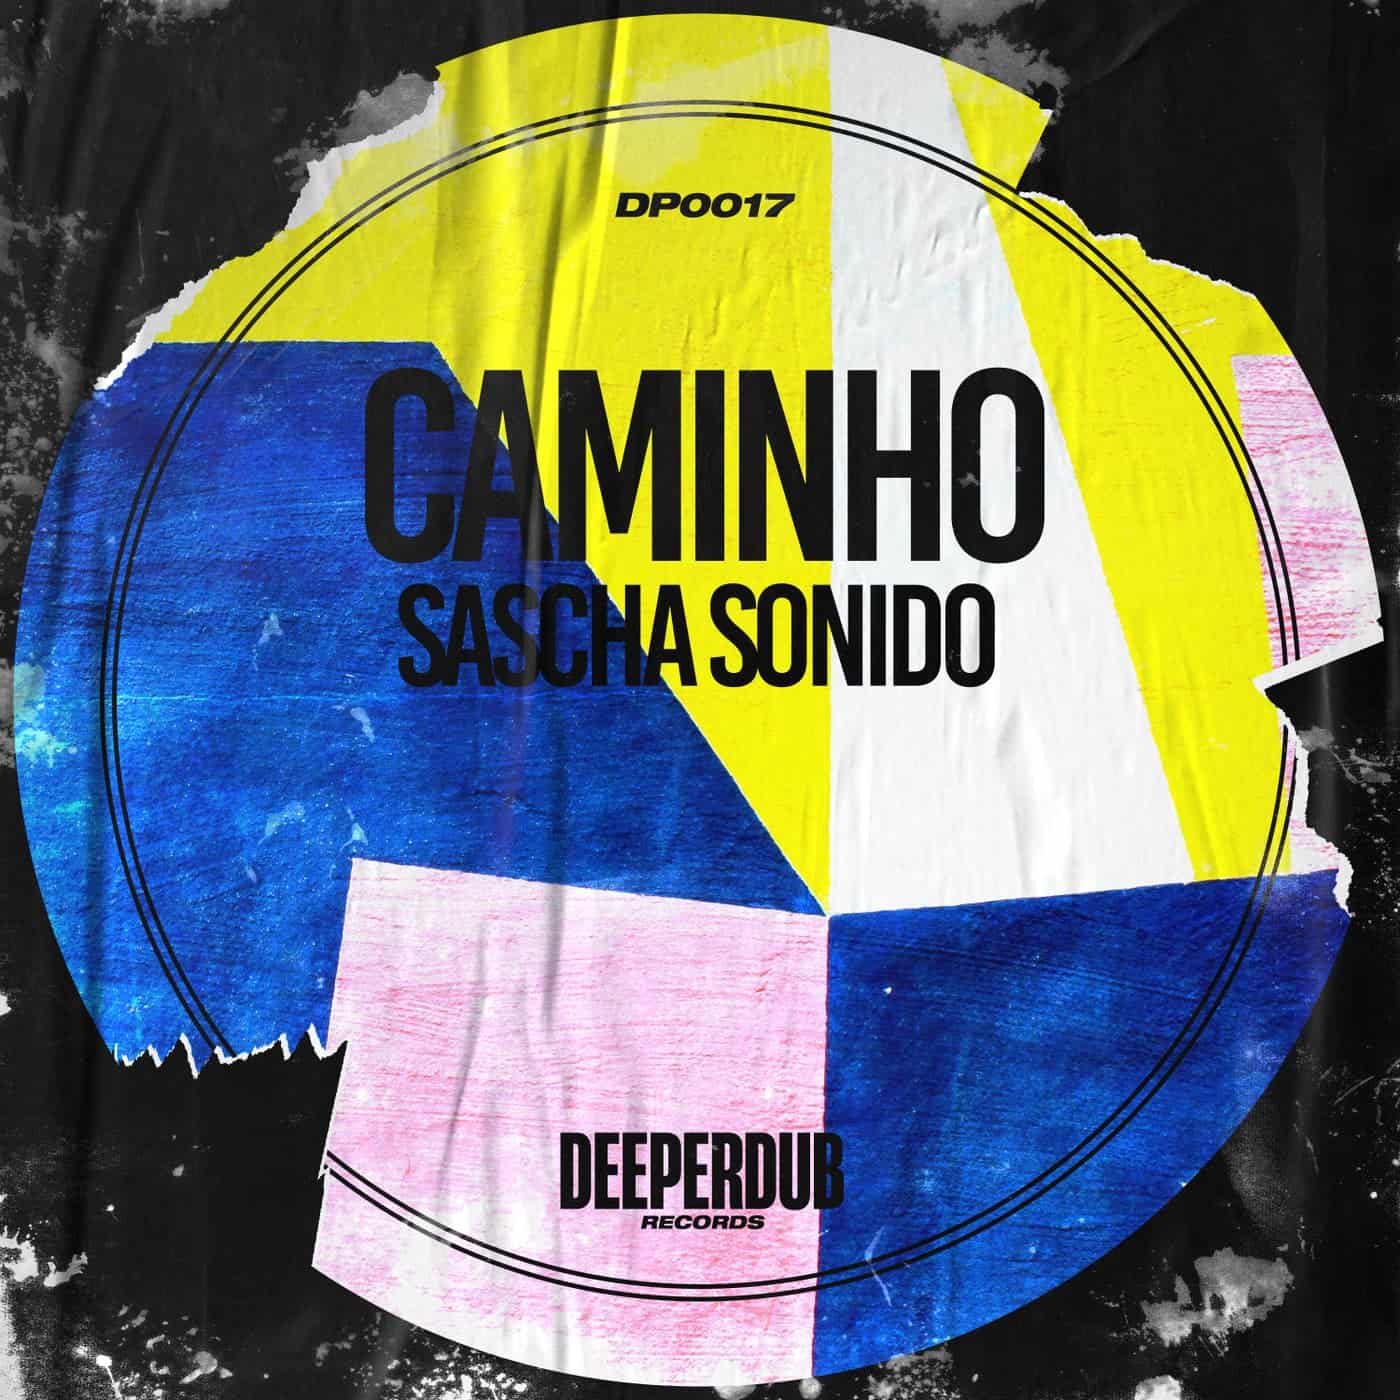 Download Sascha Sonido - Caminho on Electrobuzz